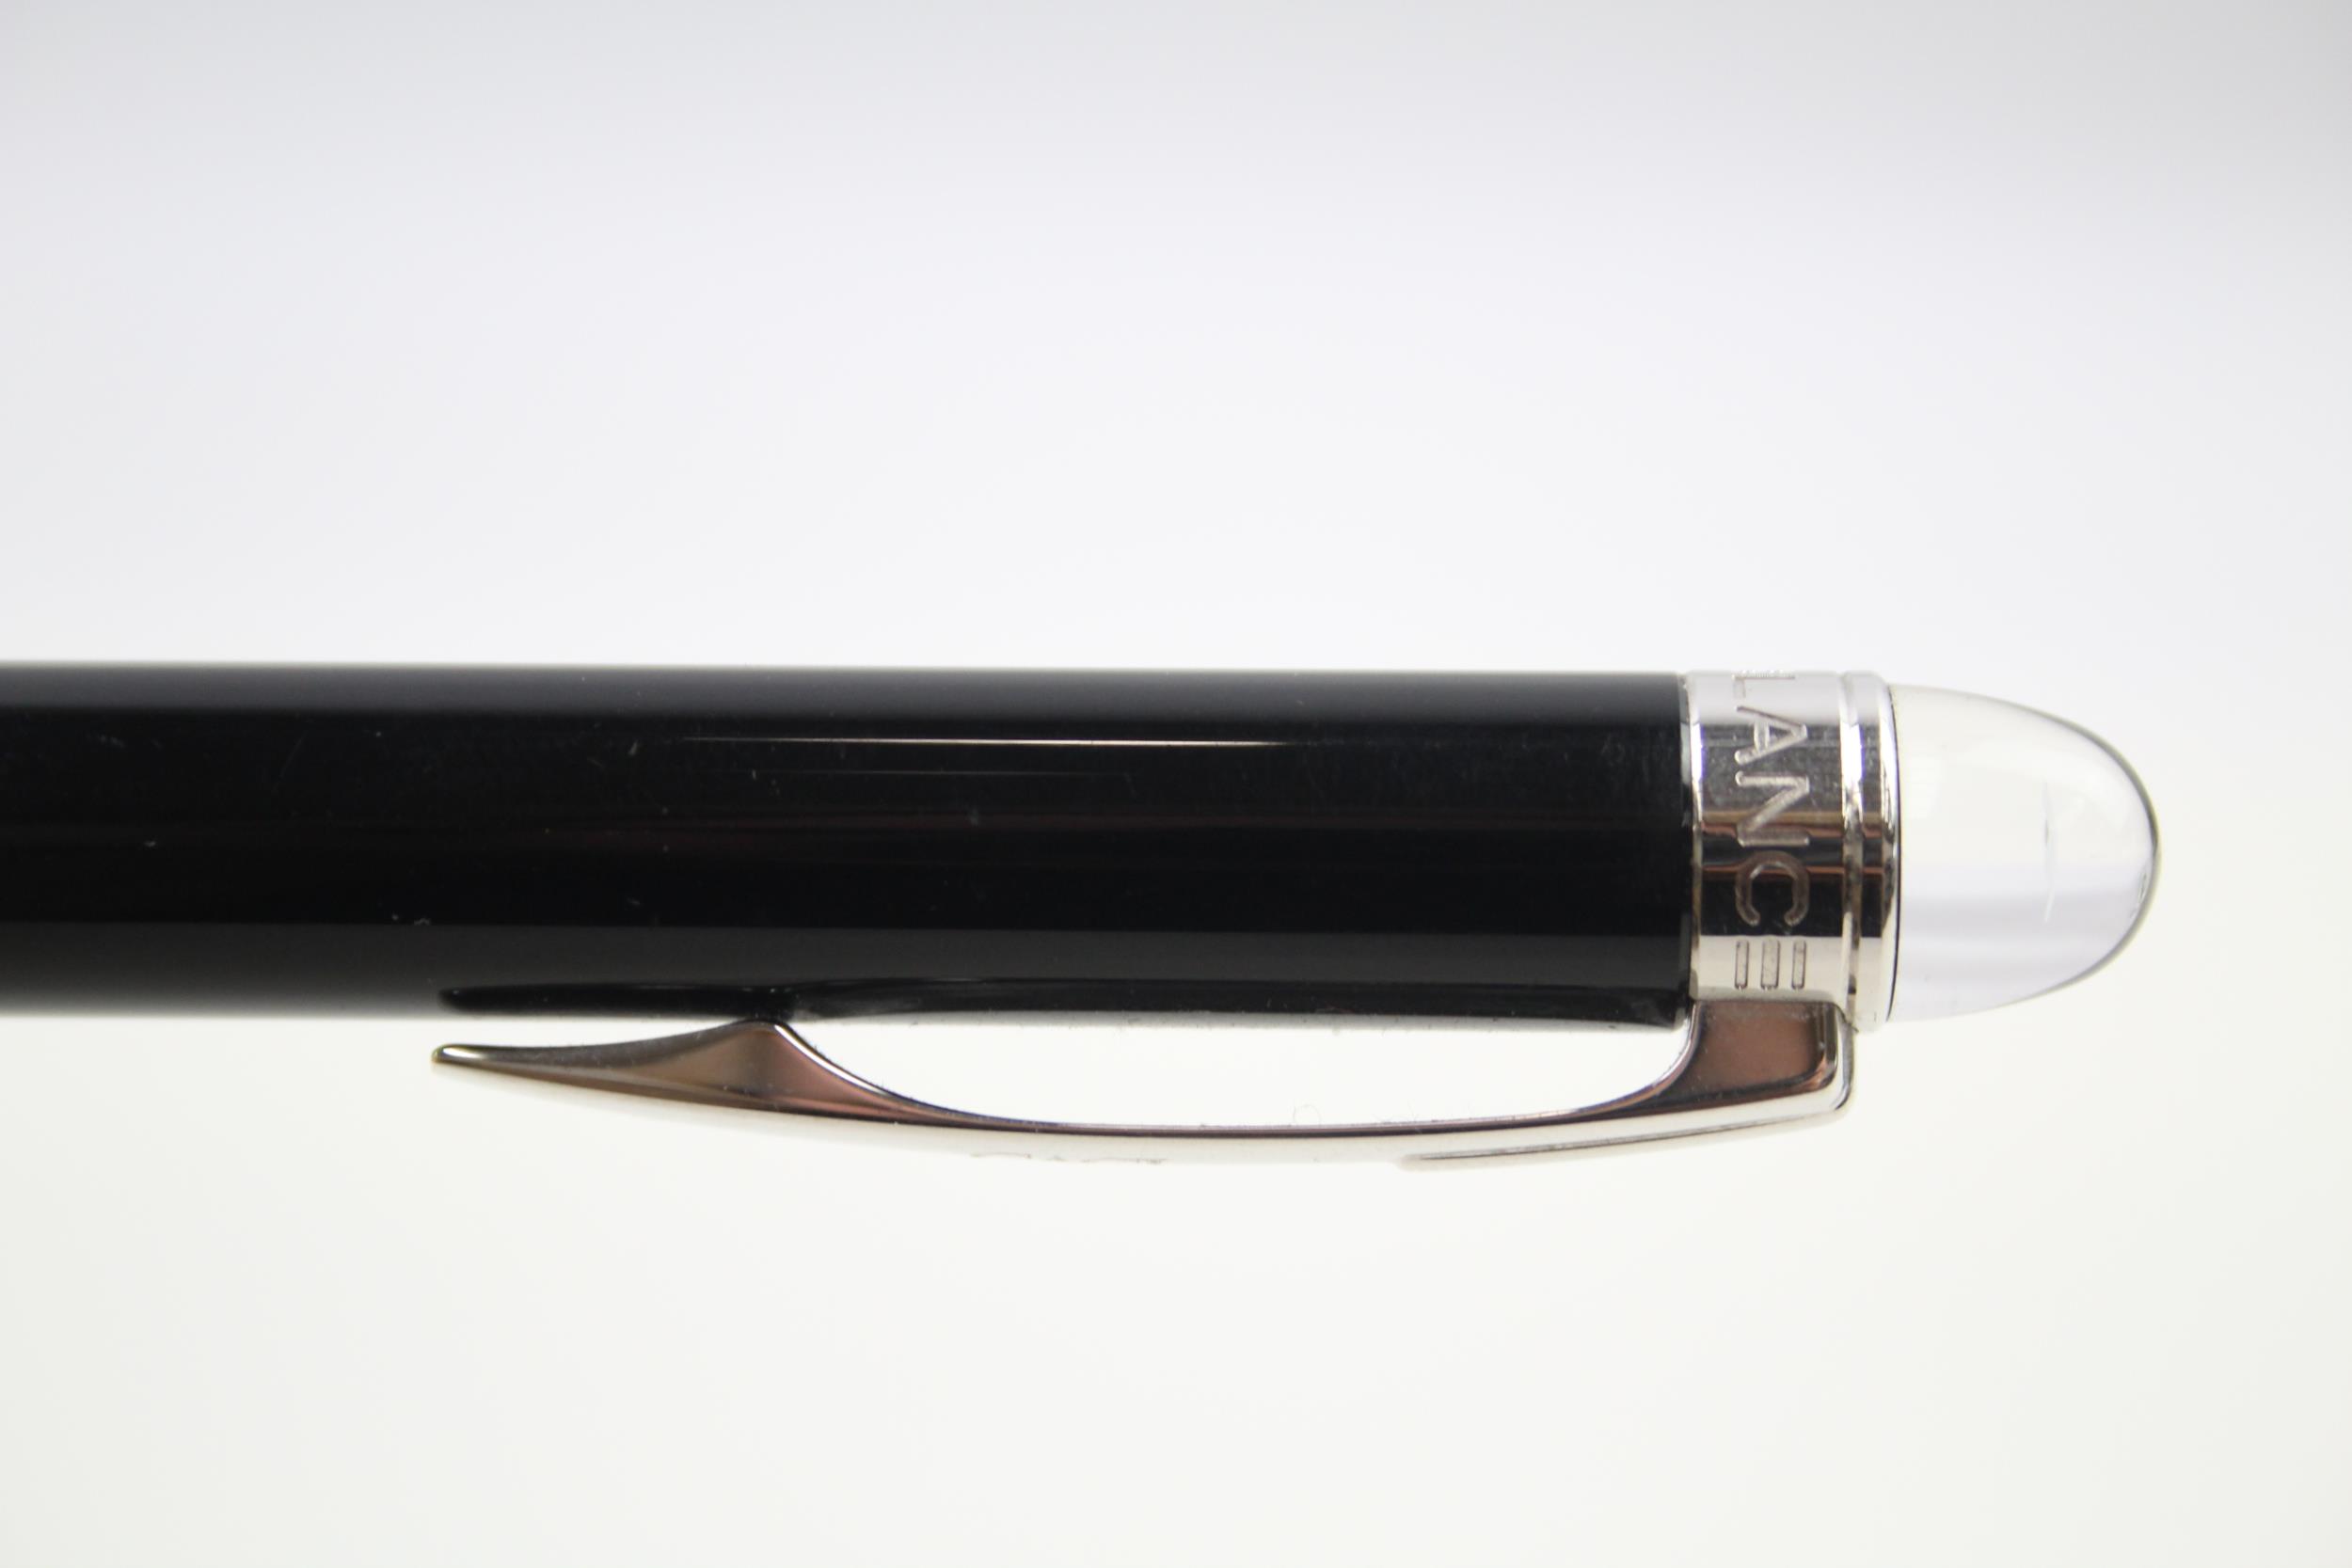 Montblanc Starwalker Propelling Pencil Black Casing Chrome Banding - w/ Personal Engraving to Cap - Image 6 of 9